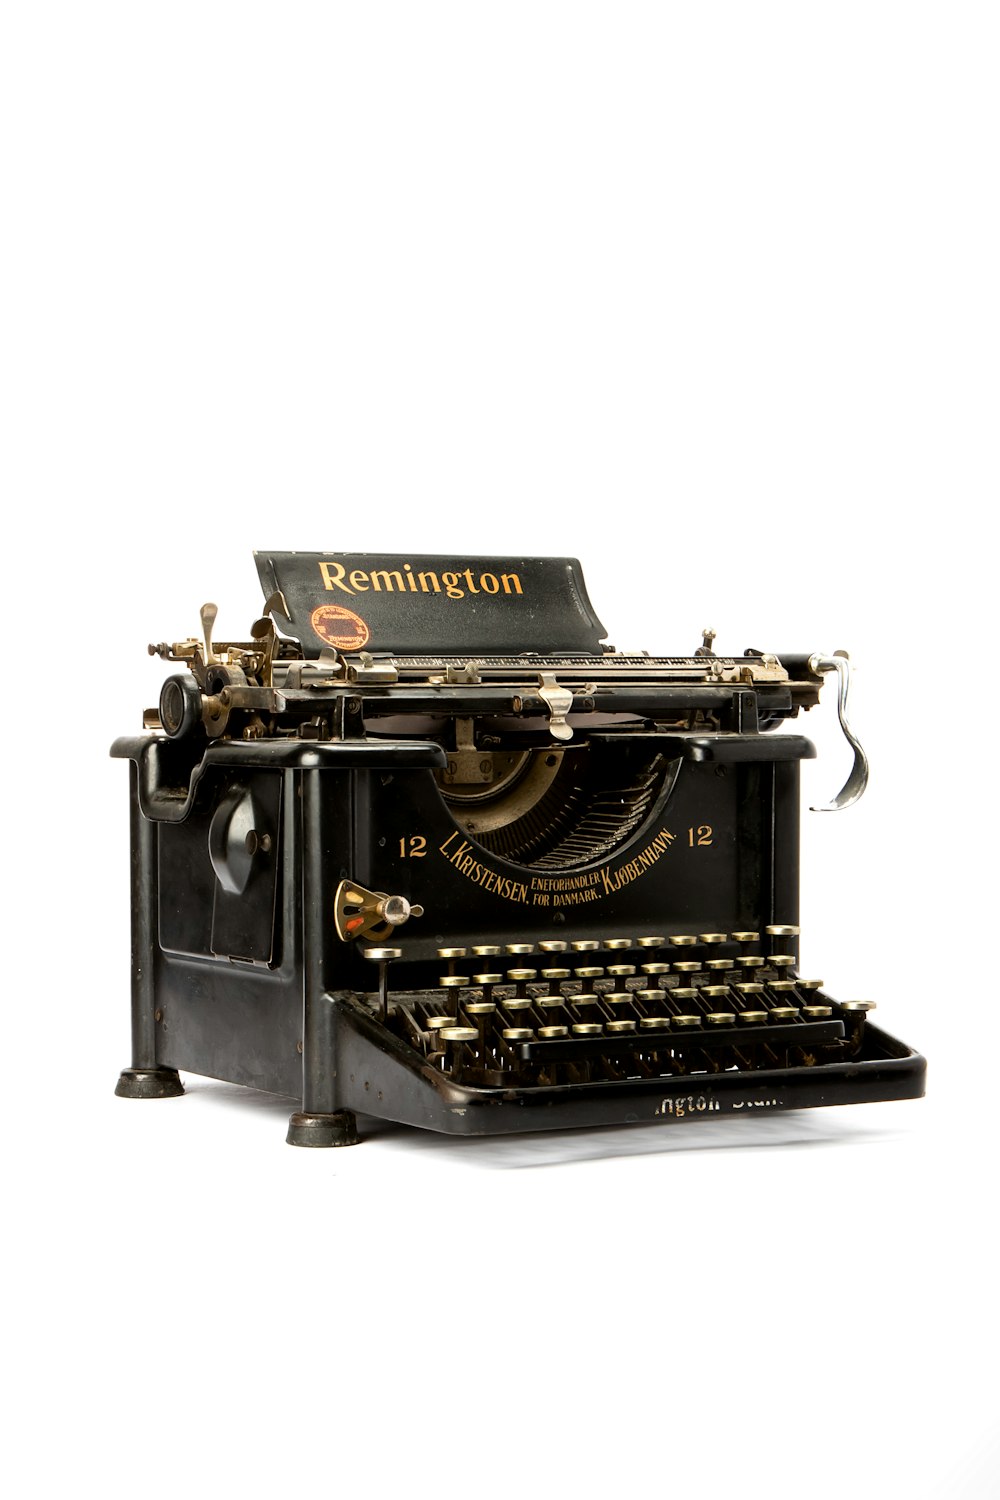 classica macchina da scrivere Remington nera